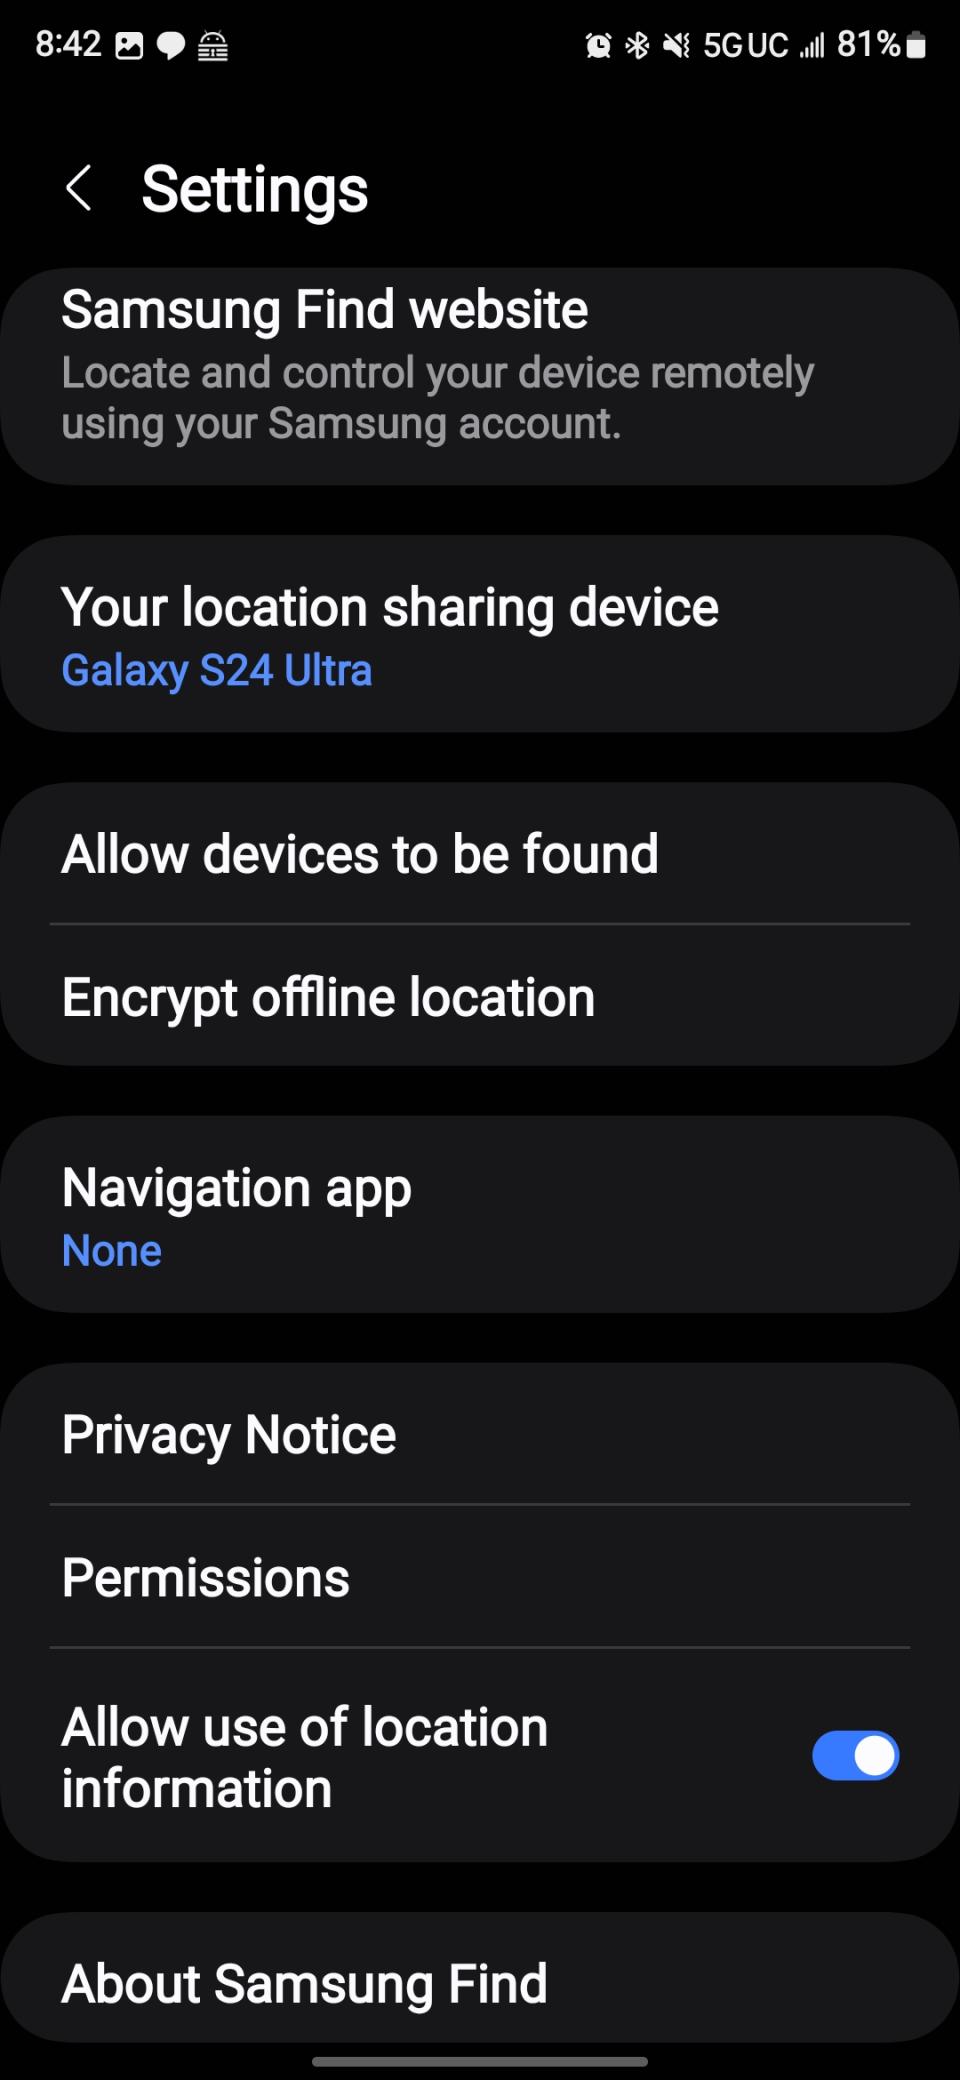 Samsung Find app settings